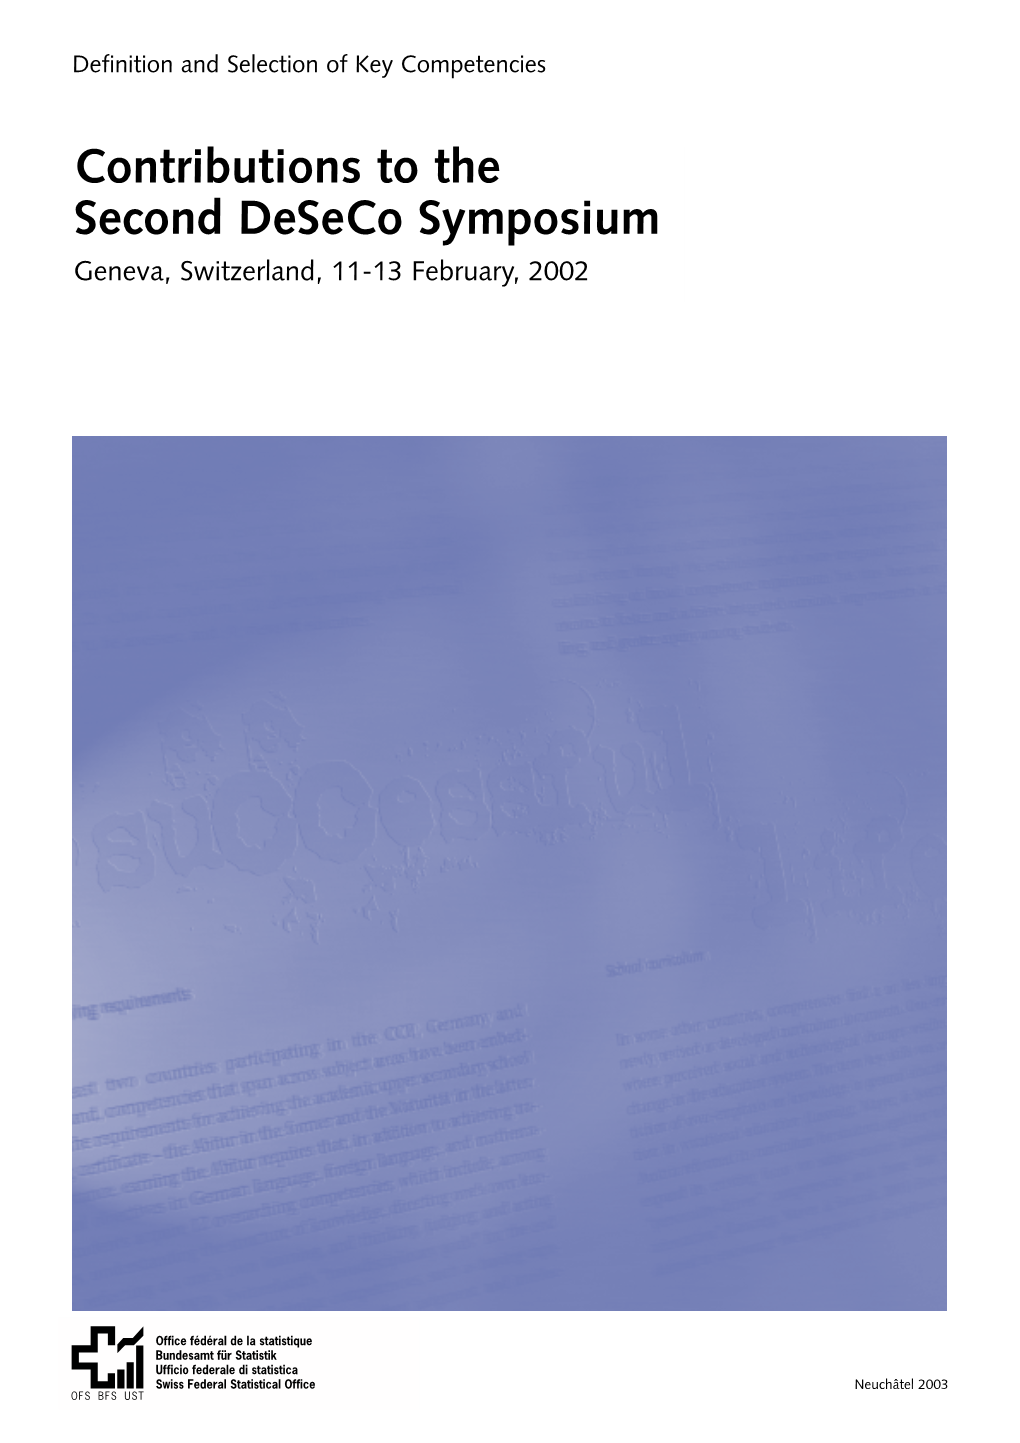 Contributions to the Second Deseco Symposium Geneva, Switzerland, 11-13 February, 2002